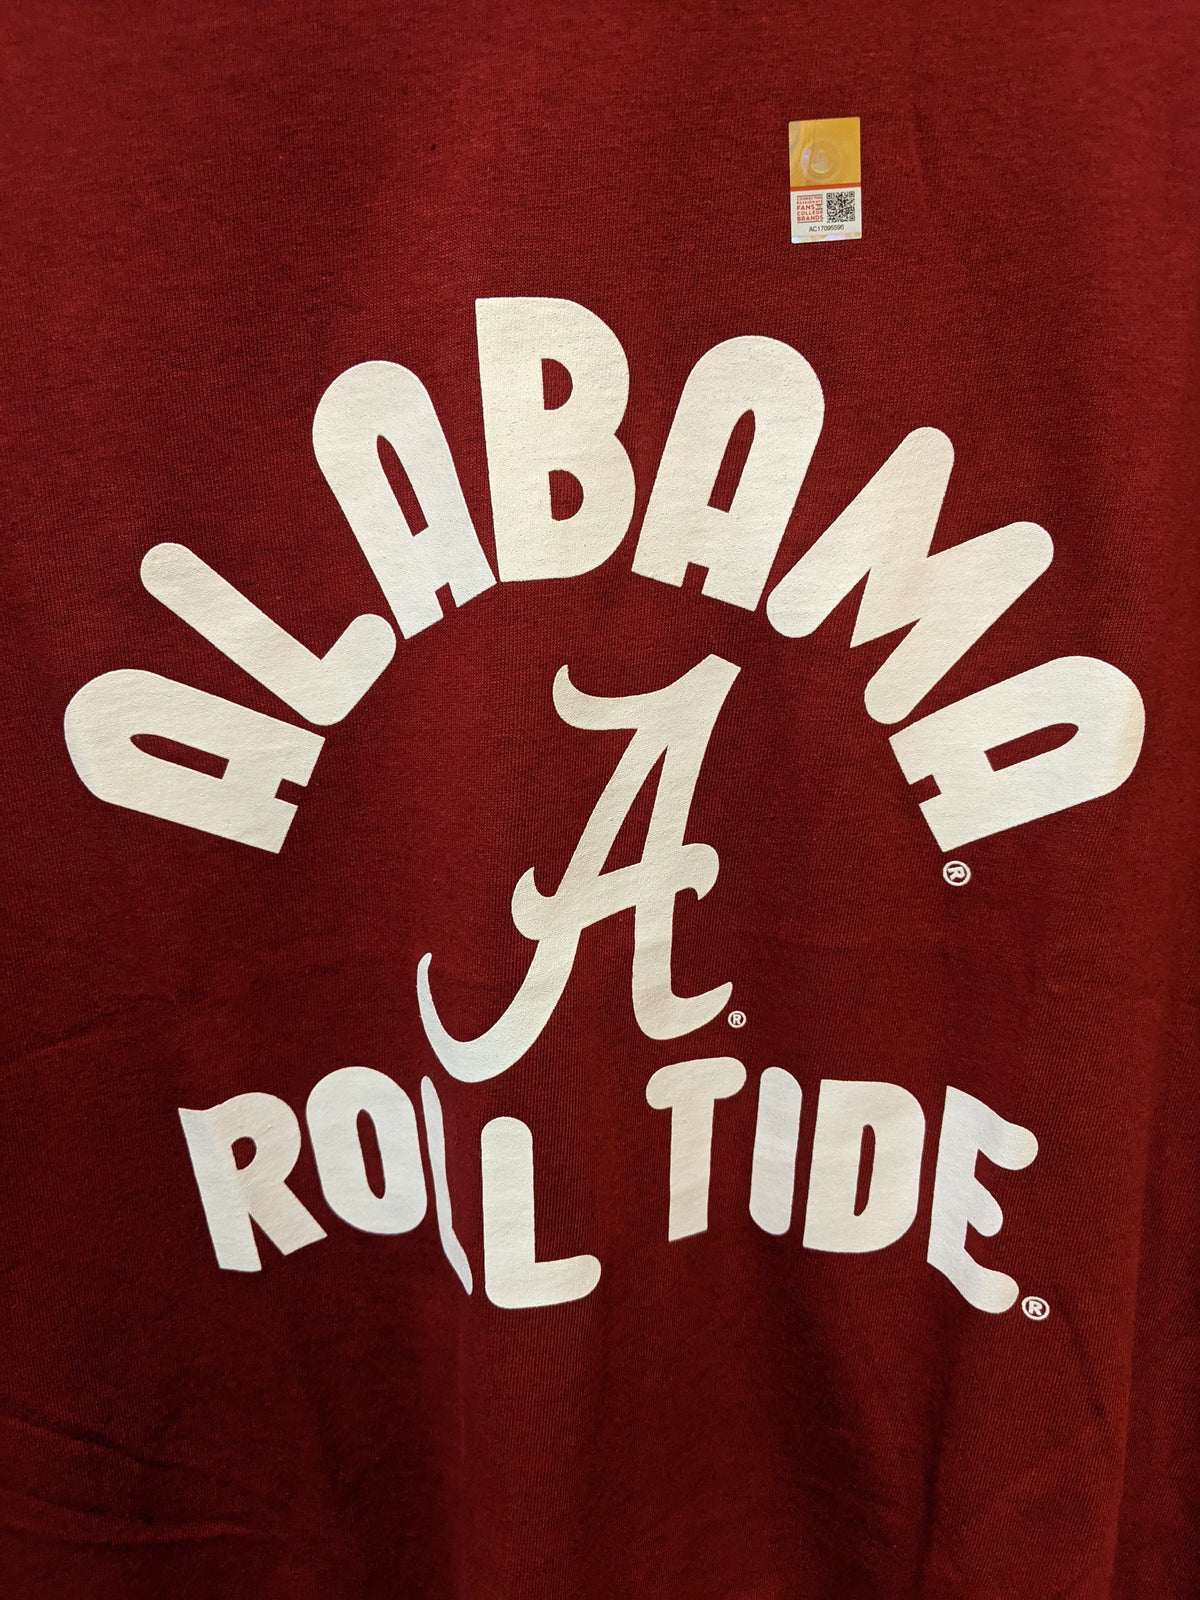 Blue 84 Shirts & Tops Alabama Crimson Tide T-Shirt